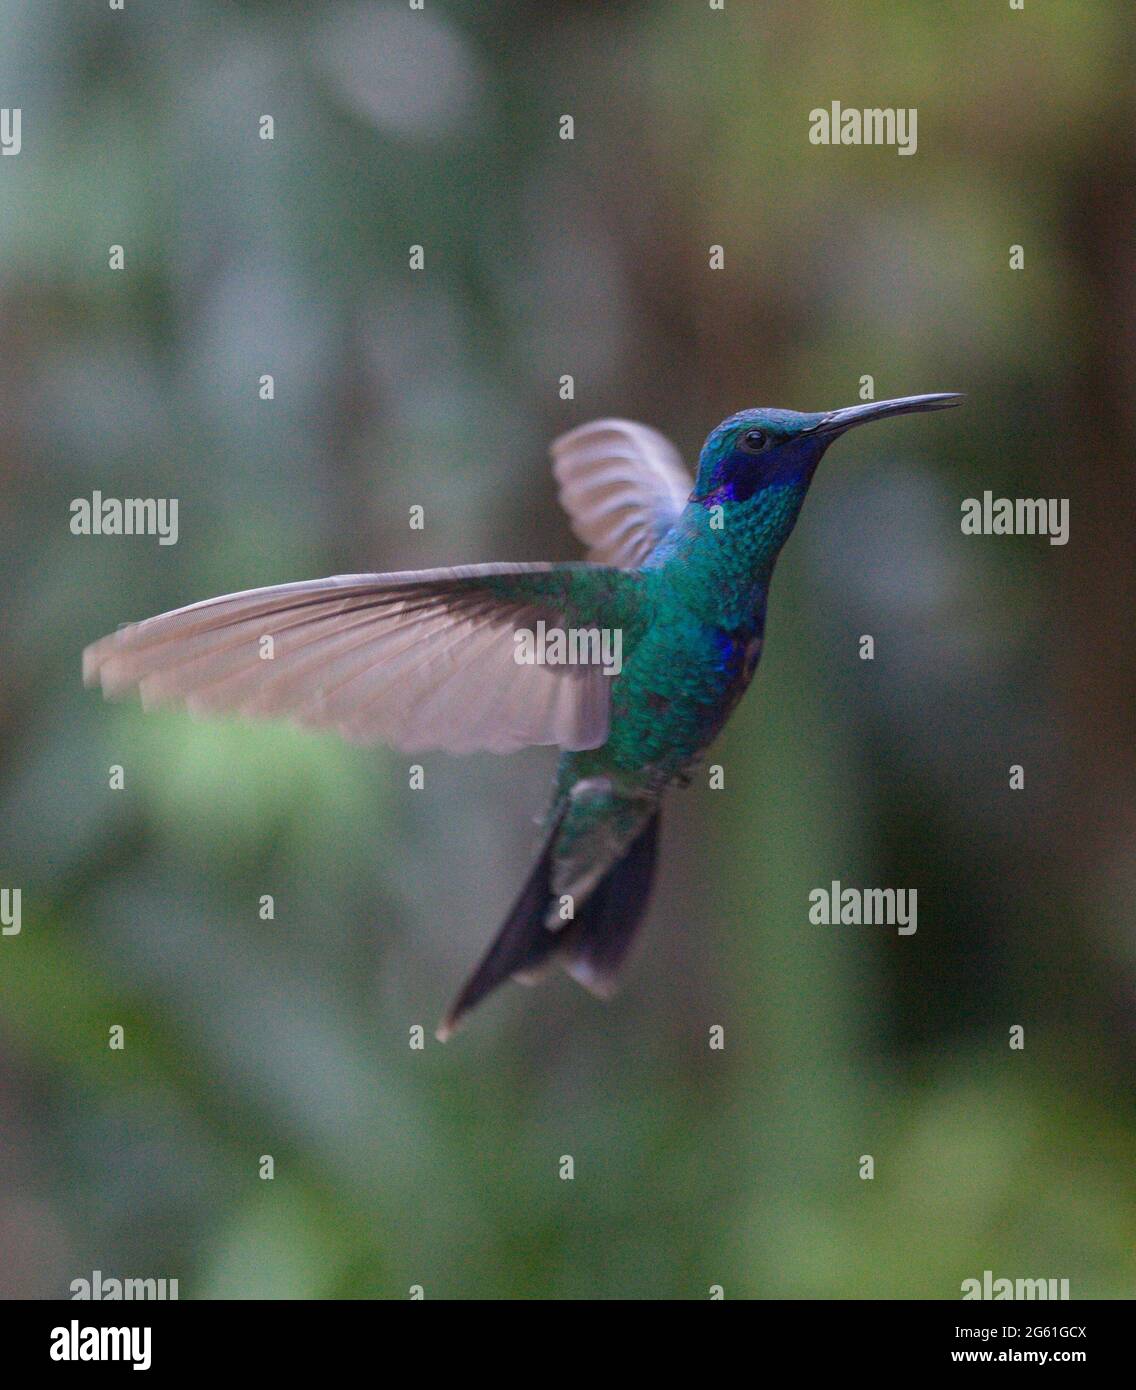 Closeup of Blue Green Hummingbird (Trochilidae) hovering in air Otavalo, Ecuador Stock Photo